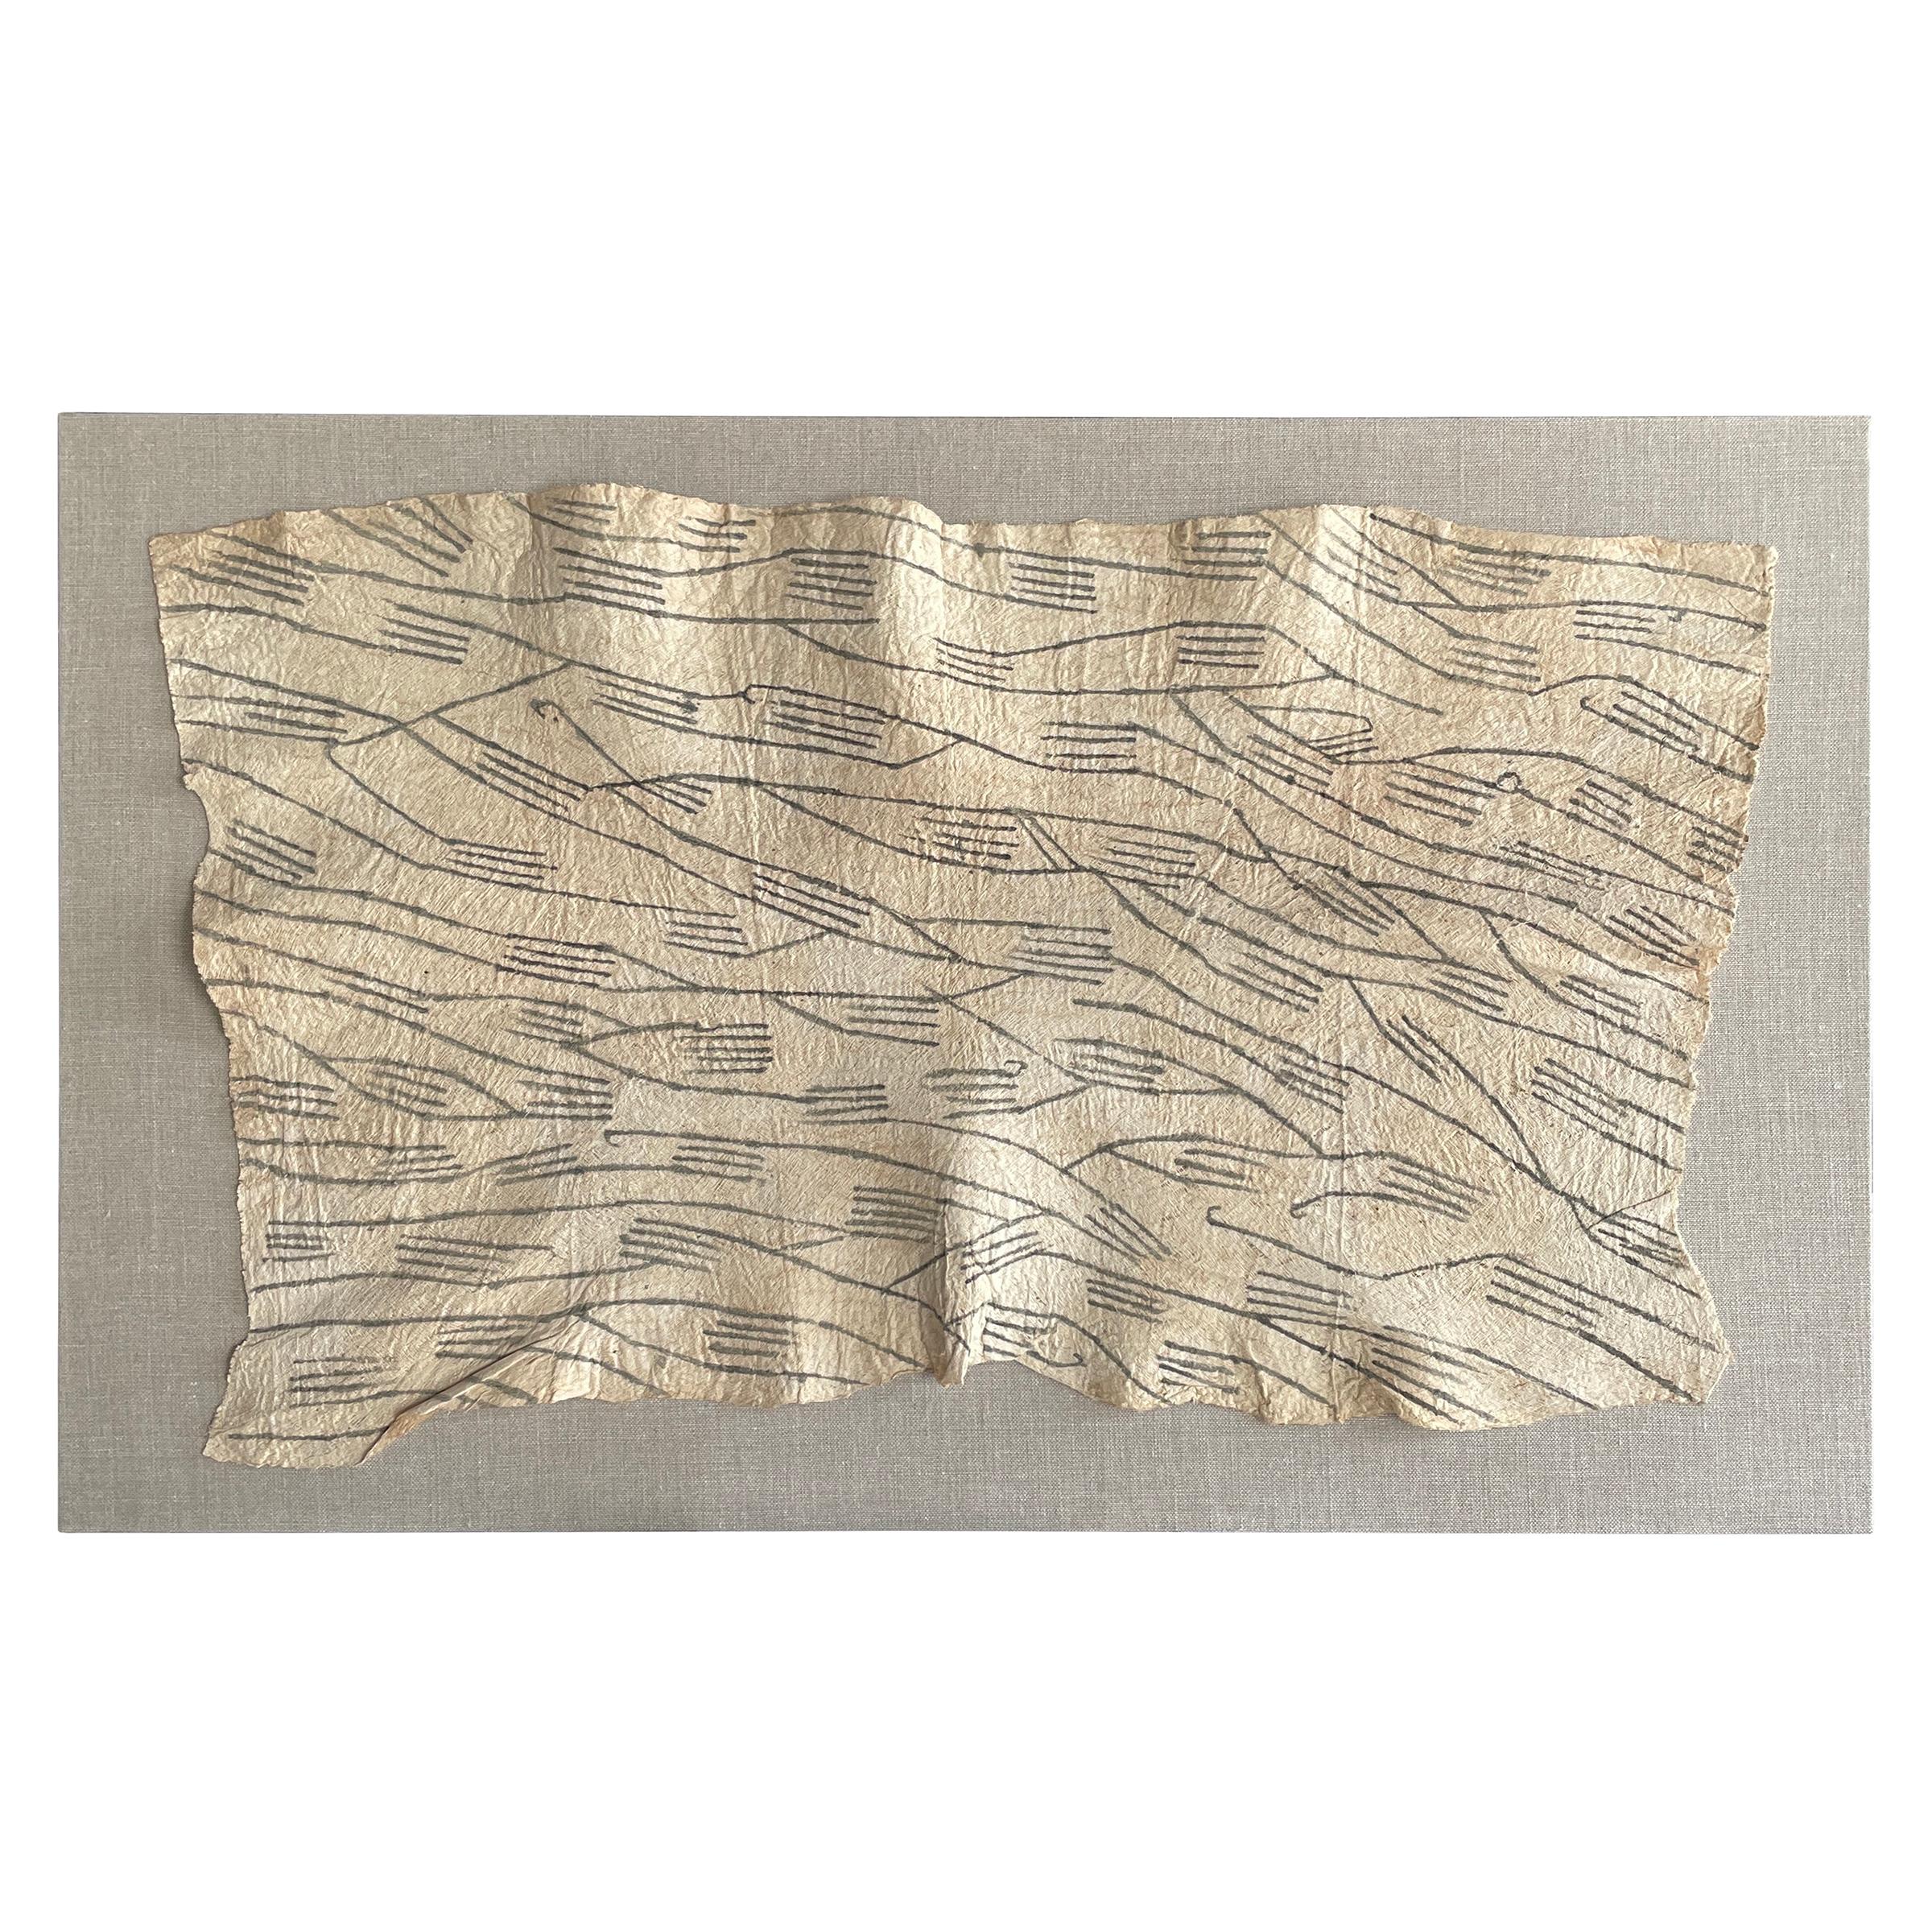 Tribal 20th Century Mbuti Pygmy Barkcloth Textile